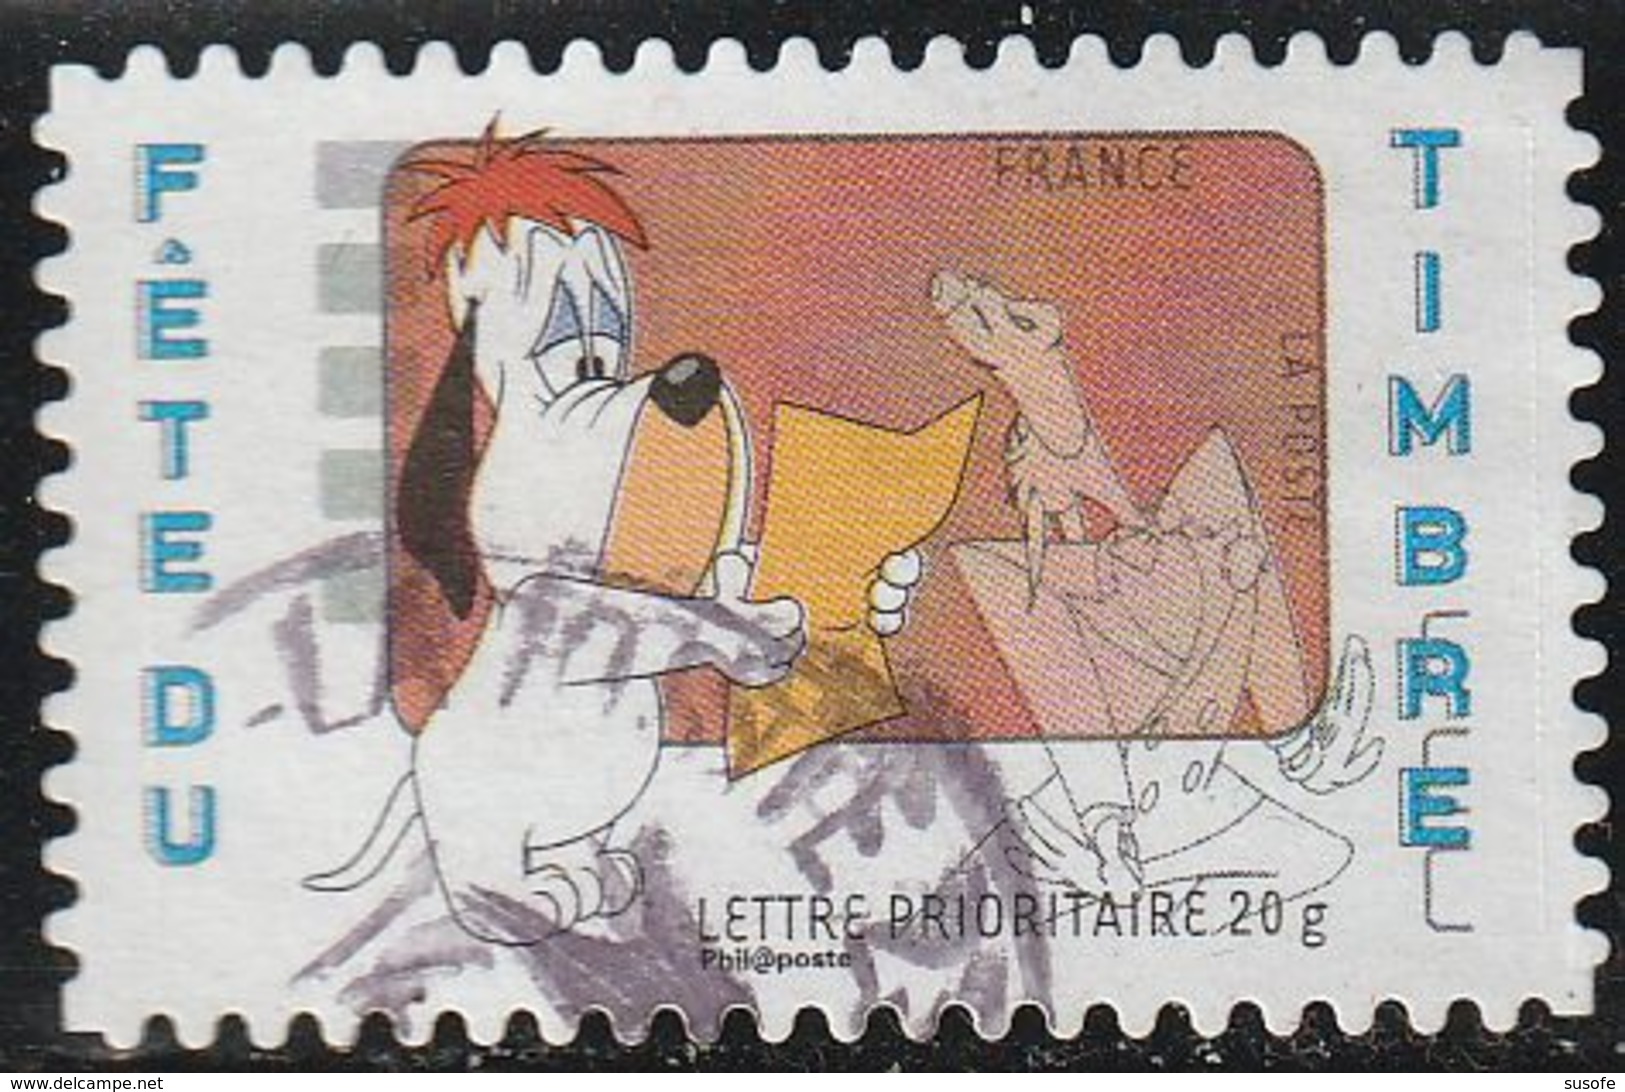 Francia 2008 Yvert 4149 Sello º Comics Droopy Y El Lobo France Stamps Timbre Frankreich Briefmarke Francobolli Ranska - Usados